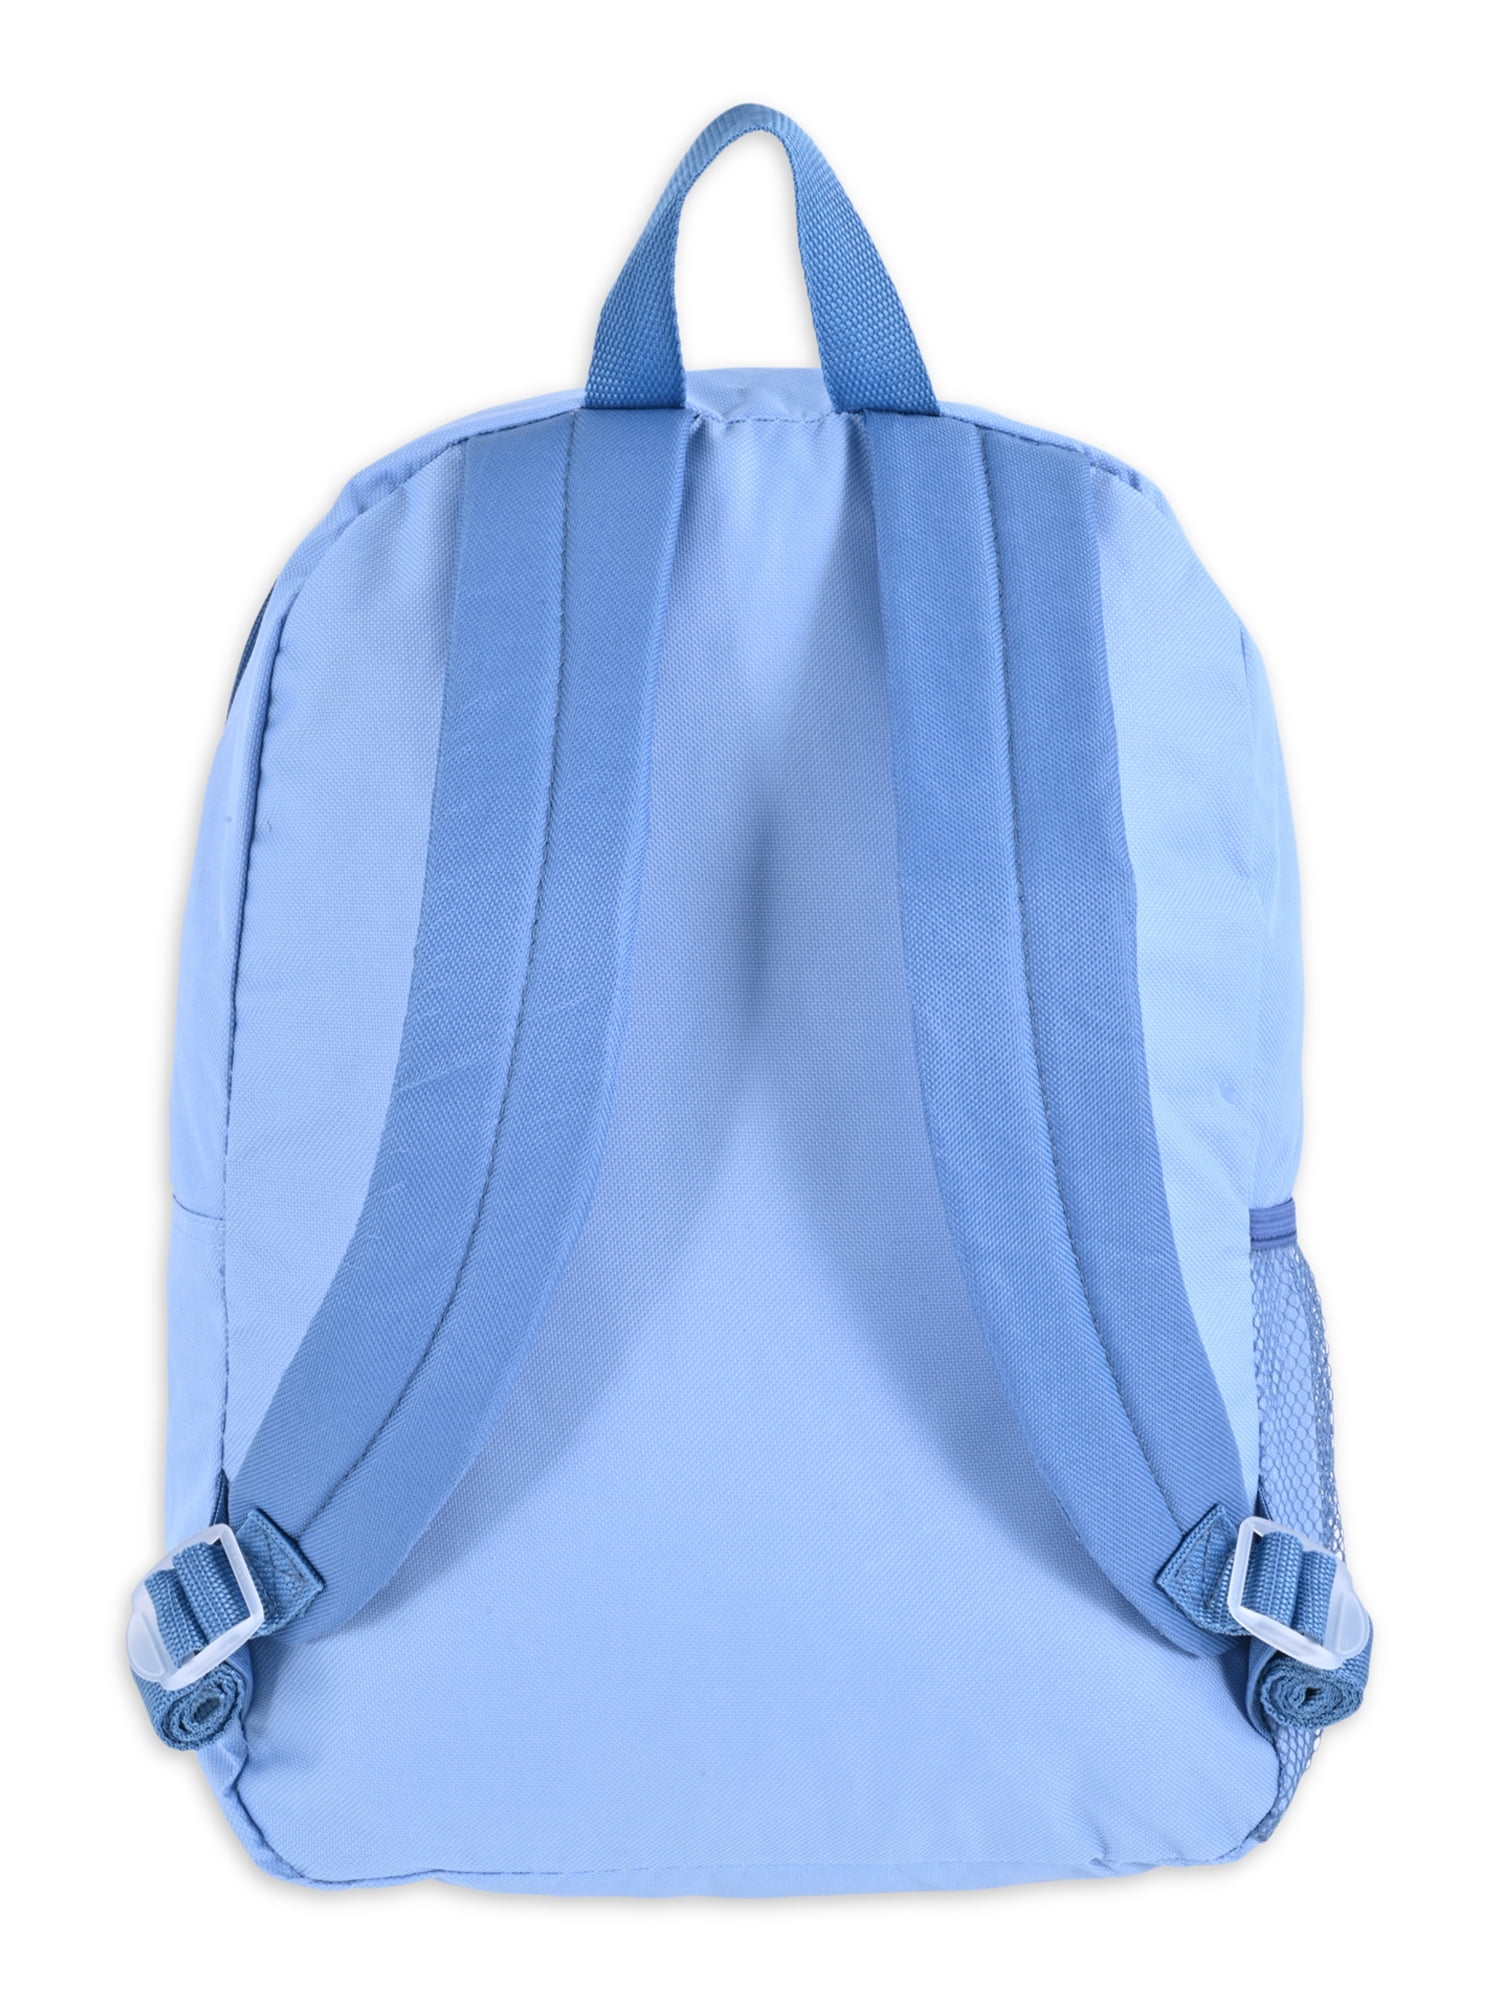 Miniso Disney Frozen II Insulated Lunch Bag (Blue)